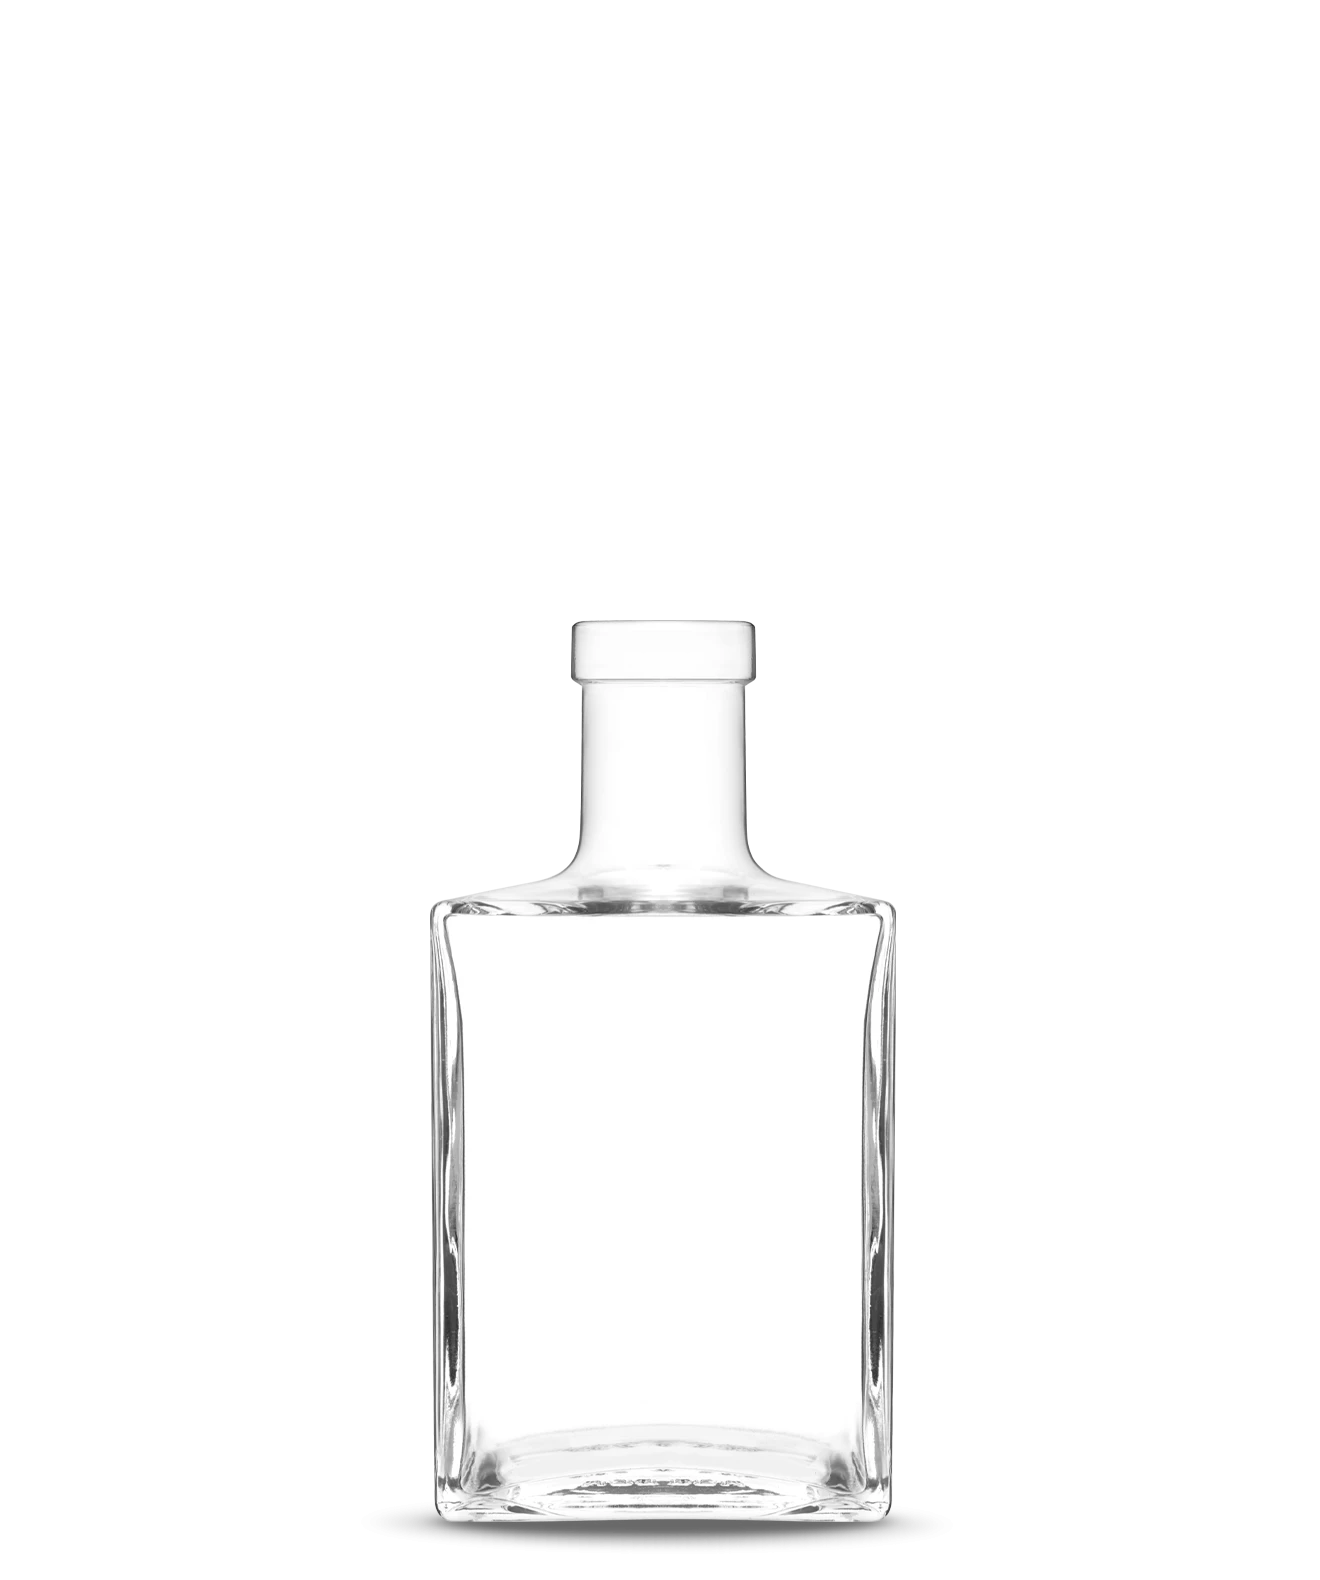 PAMELA Fragancias Perfumes para ambiente Vetroelite View 1